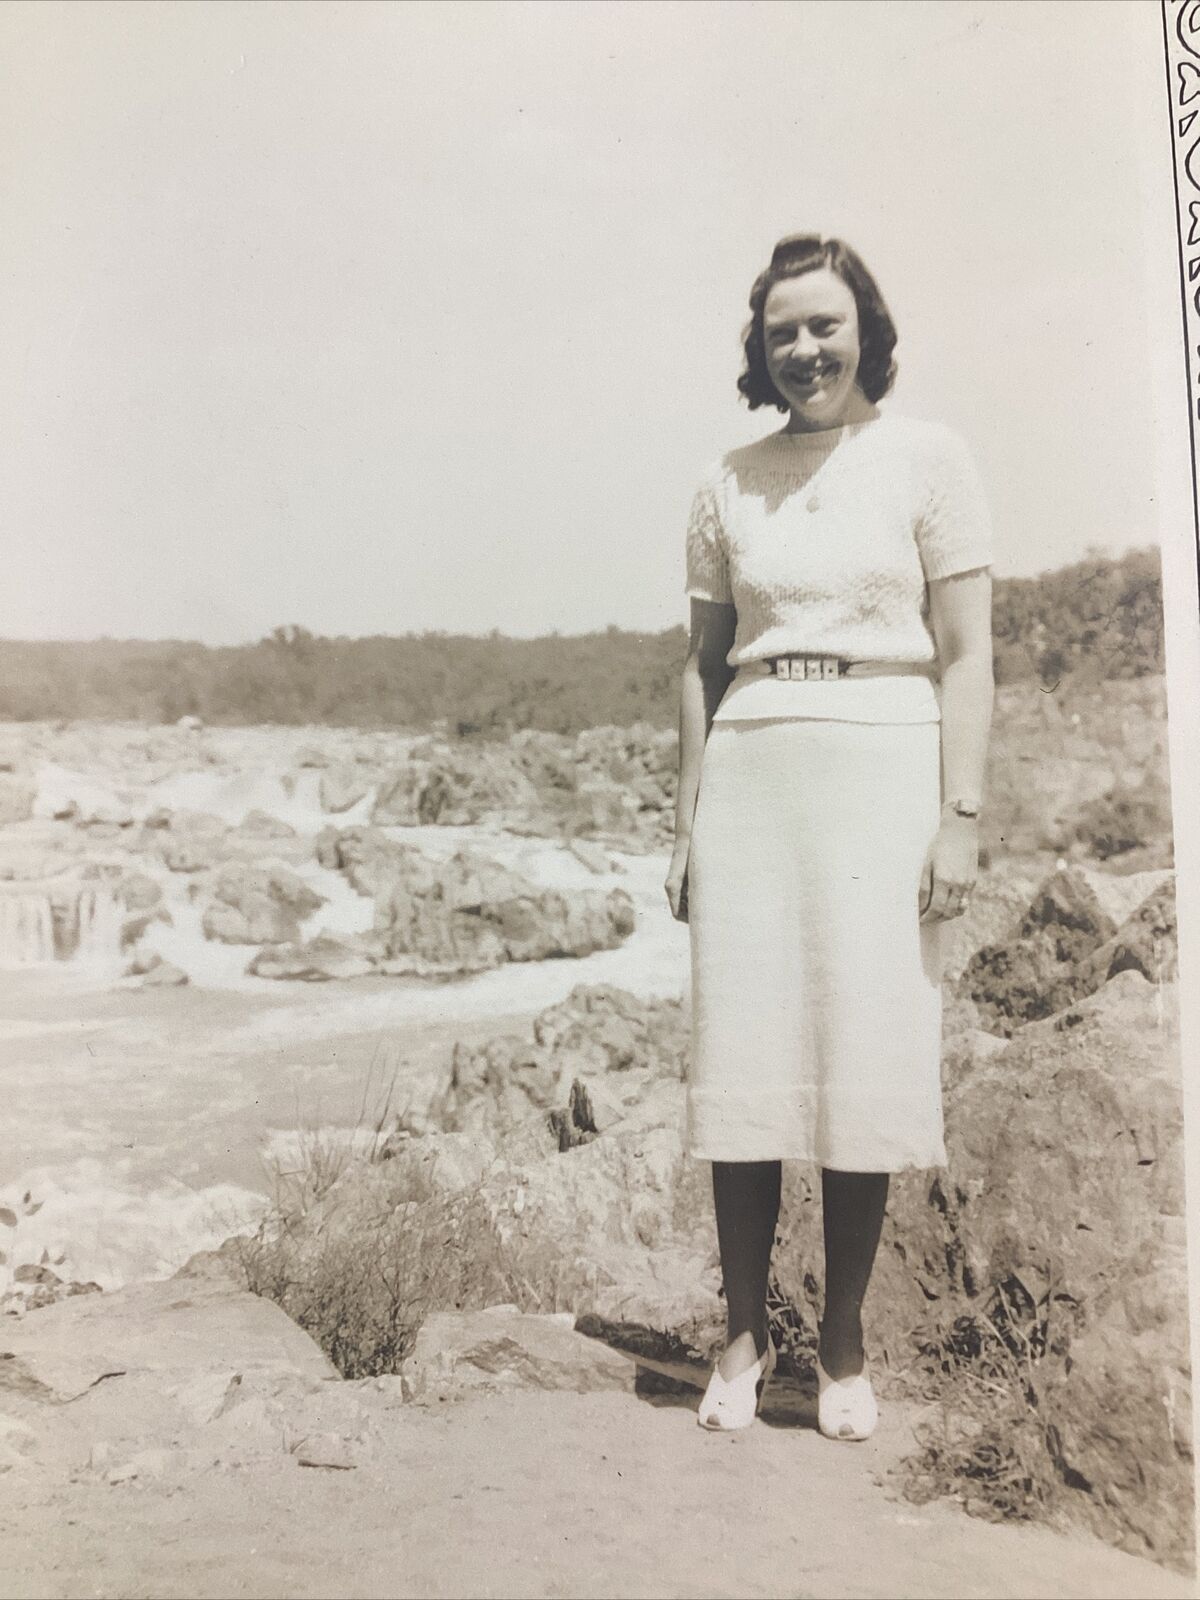 Pretty Girl Antique Photo VTG 1938 Fashion Dress Desert Rocks Water Fall Atlanta